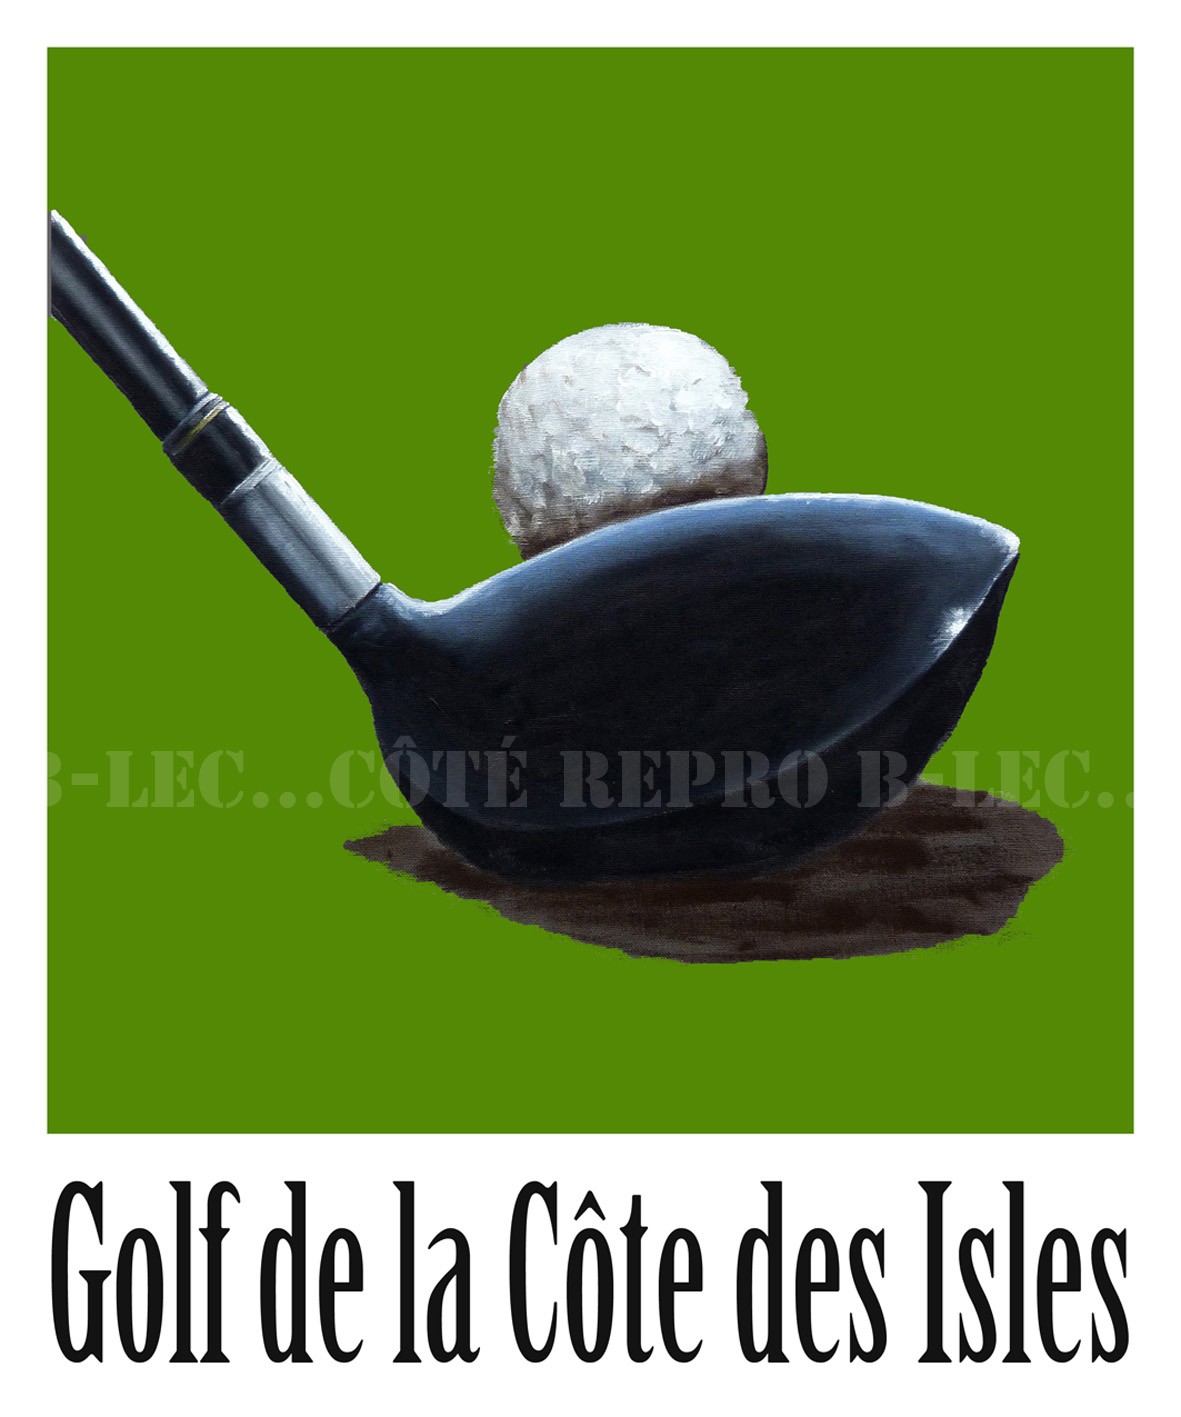 Golf01 00